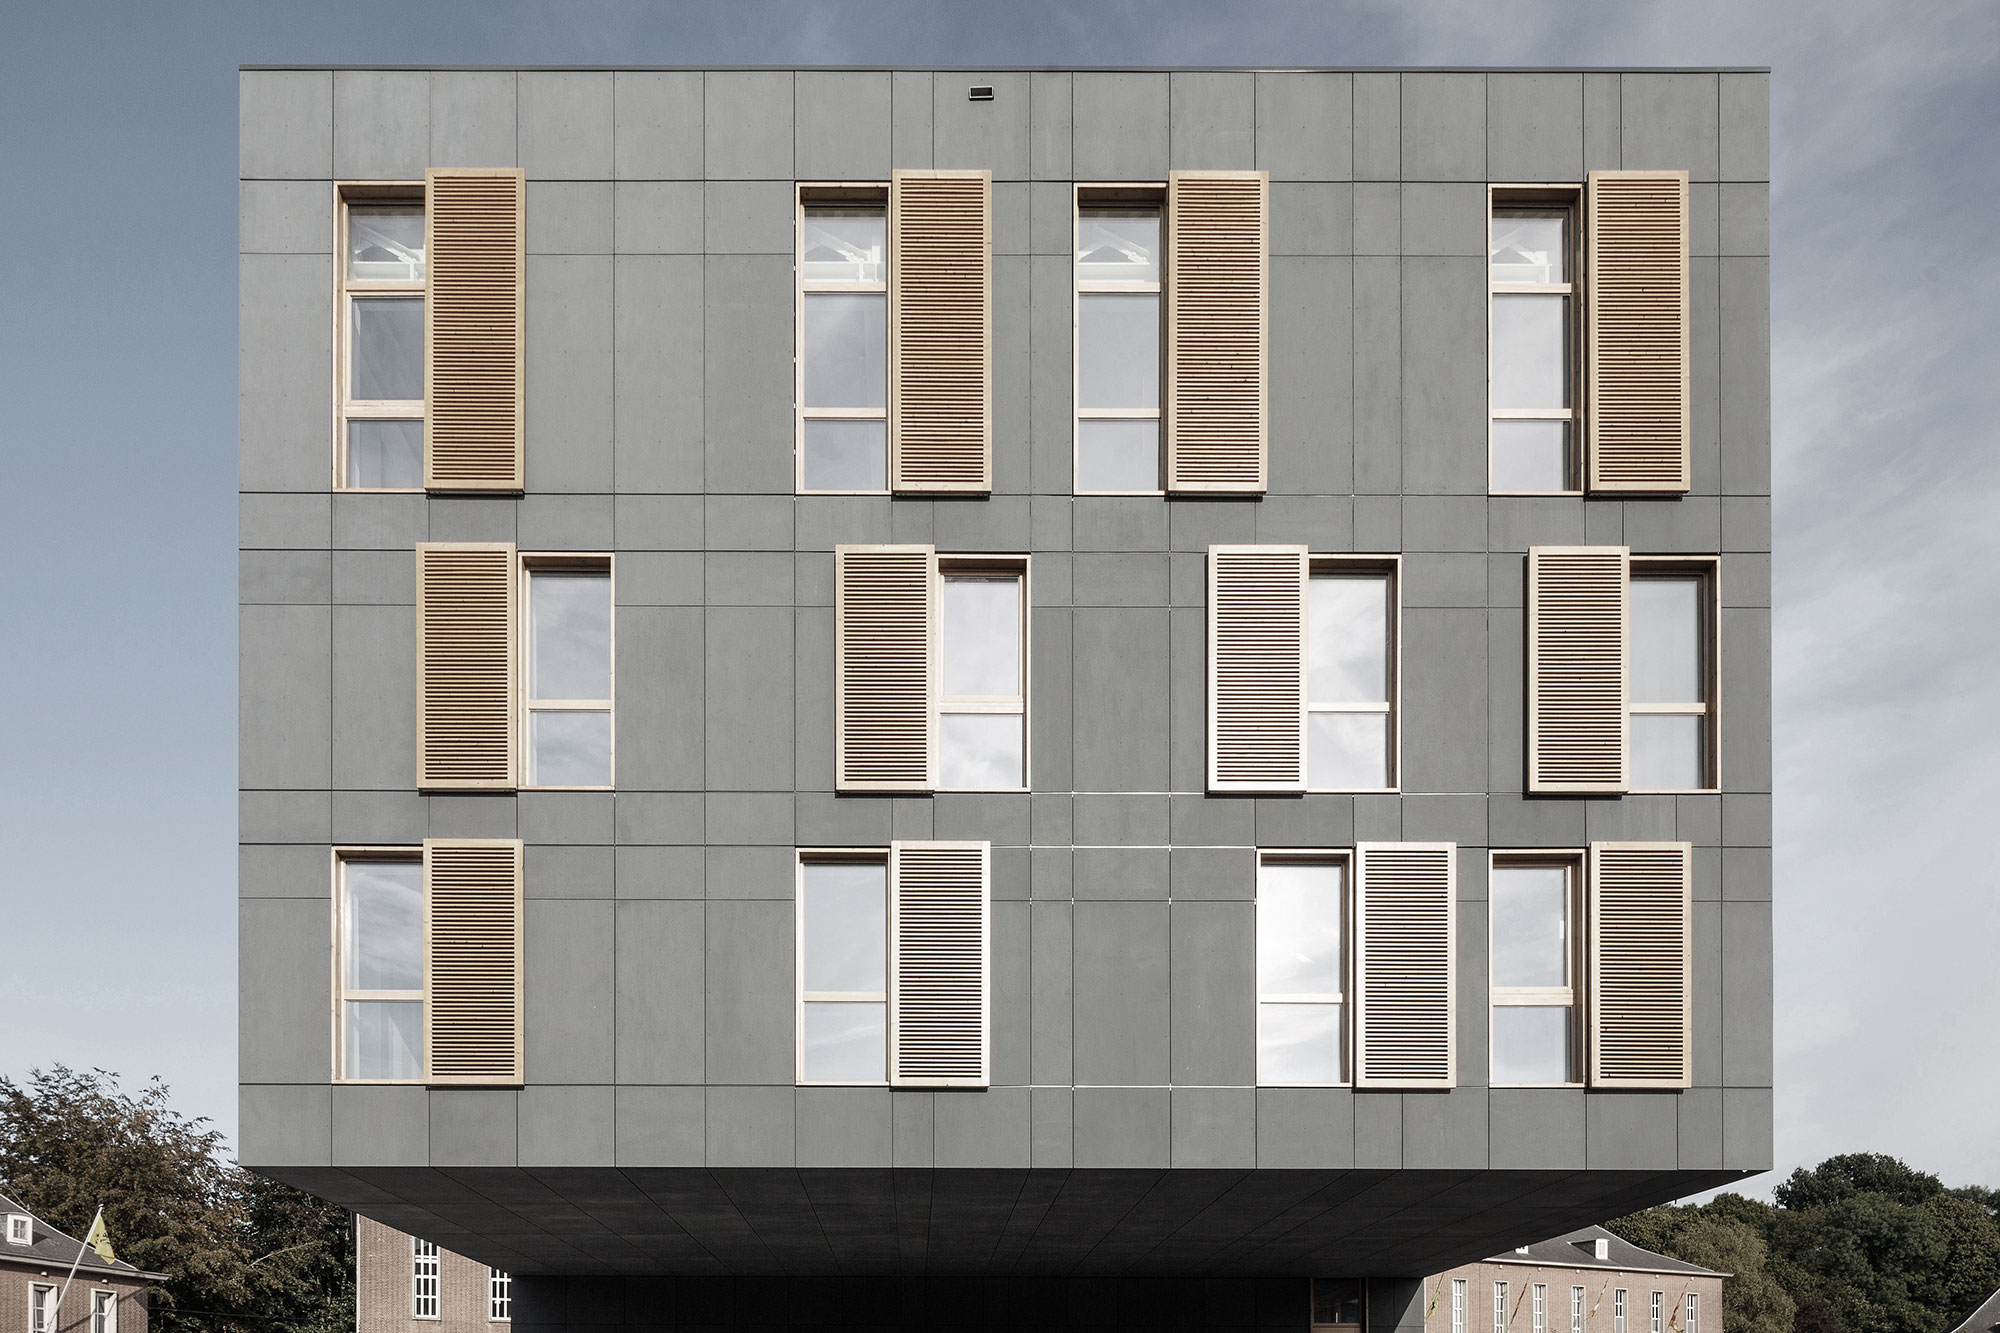 2 EQUITONE facade panels Mortsel city square